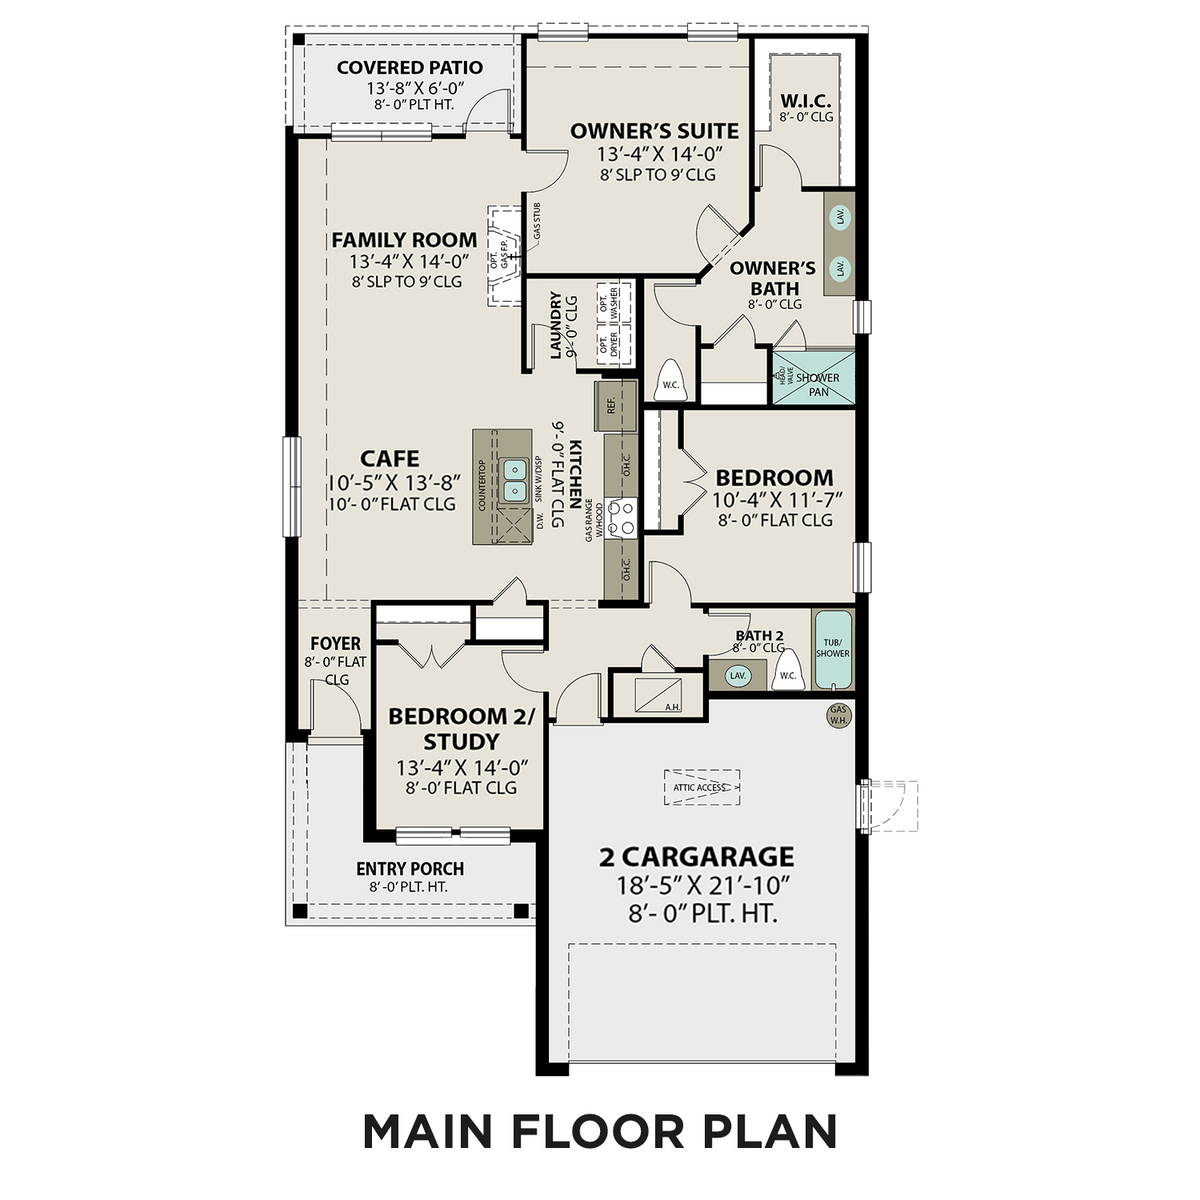 1 - The Costa C floor plan layout for 2568 Allegretto Sea Drive in Davidson Homes' Sunterra community.